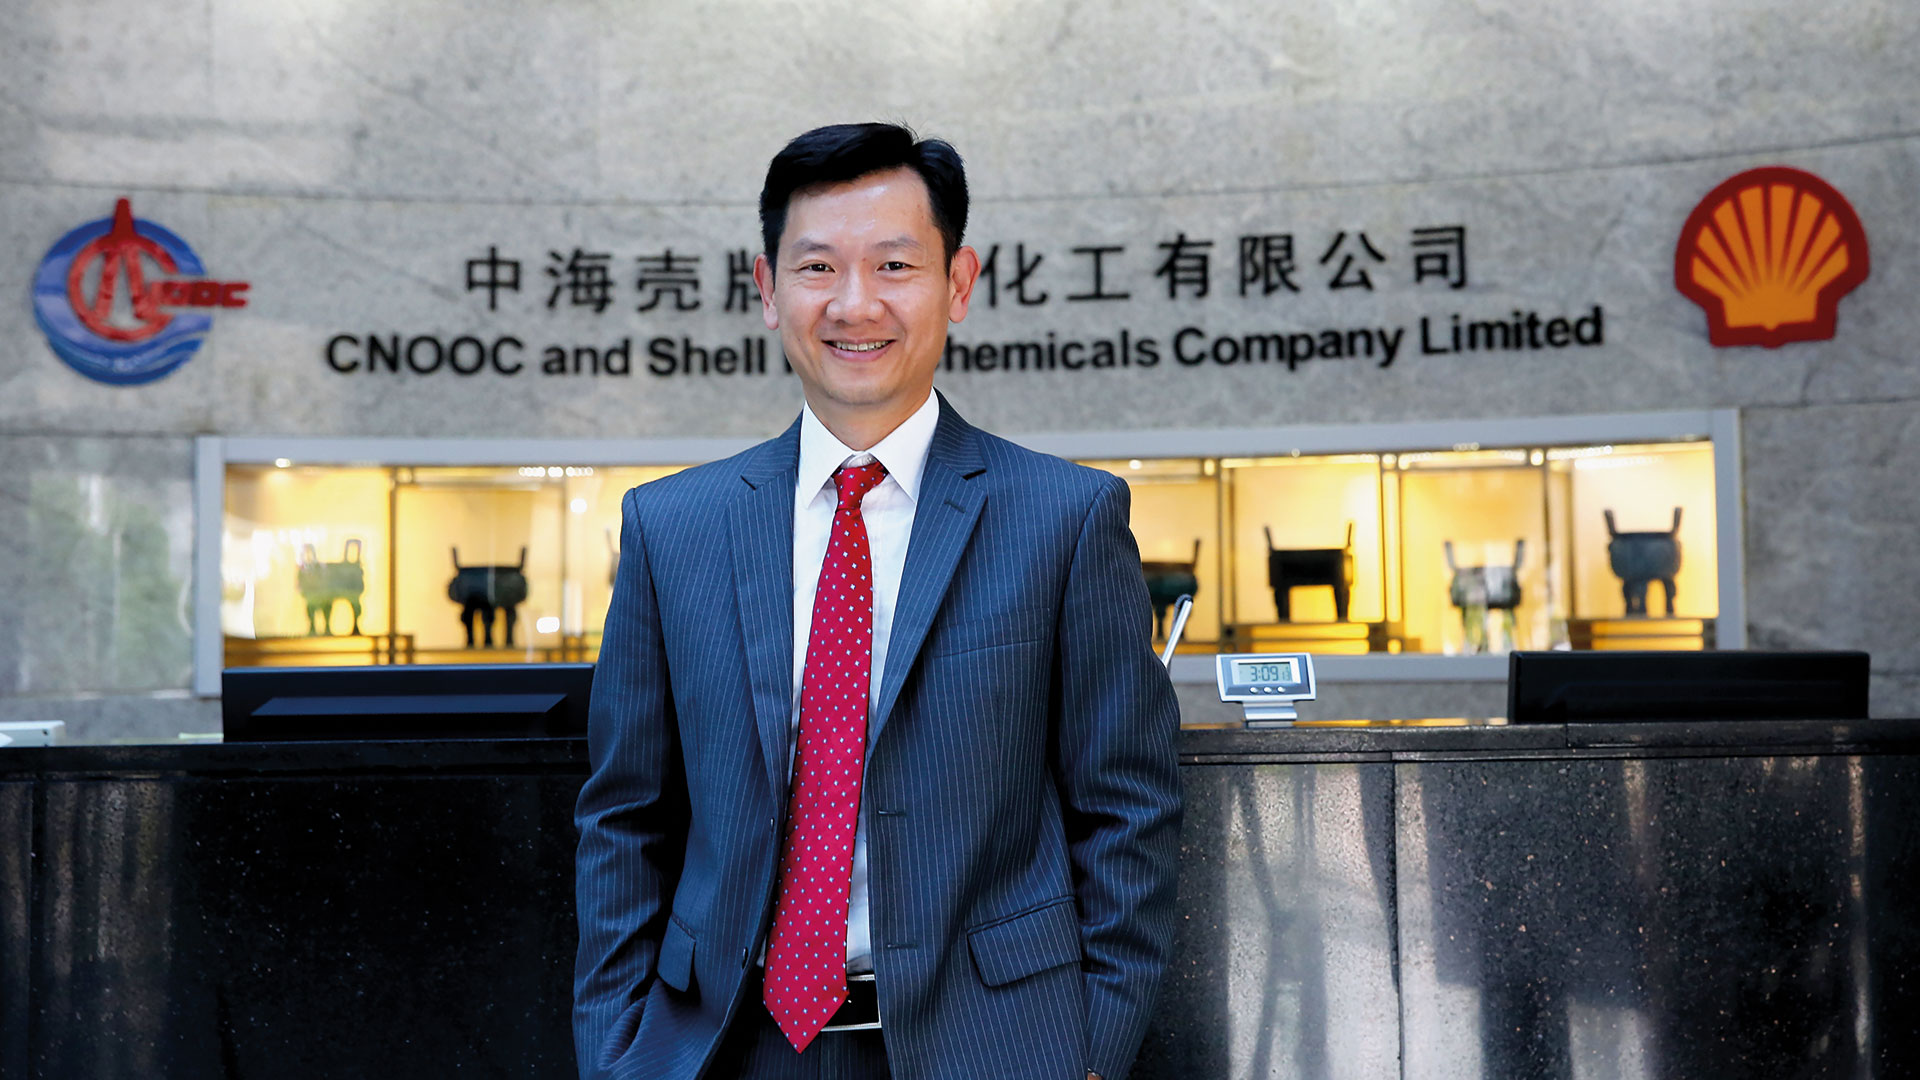 Patrick Tai, Finance Director